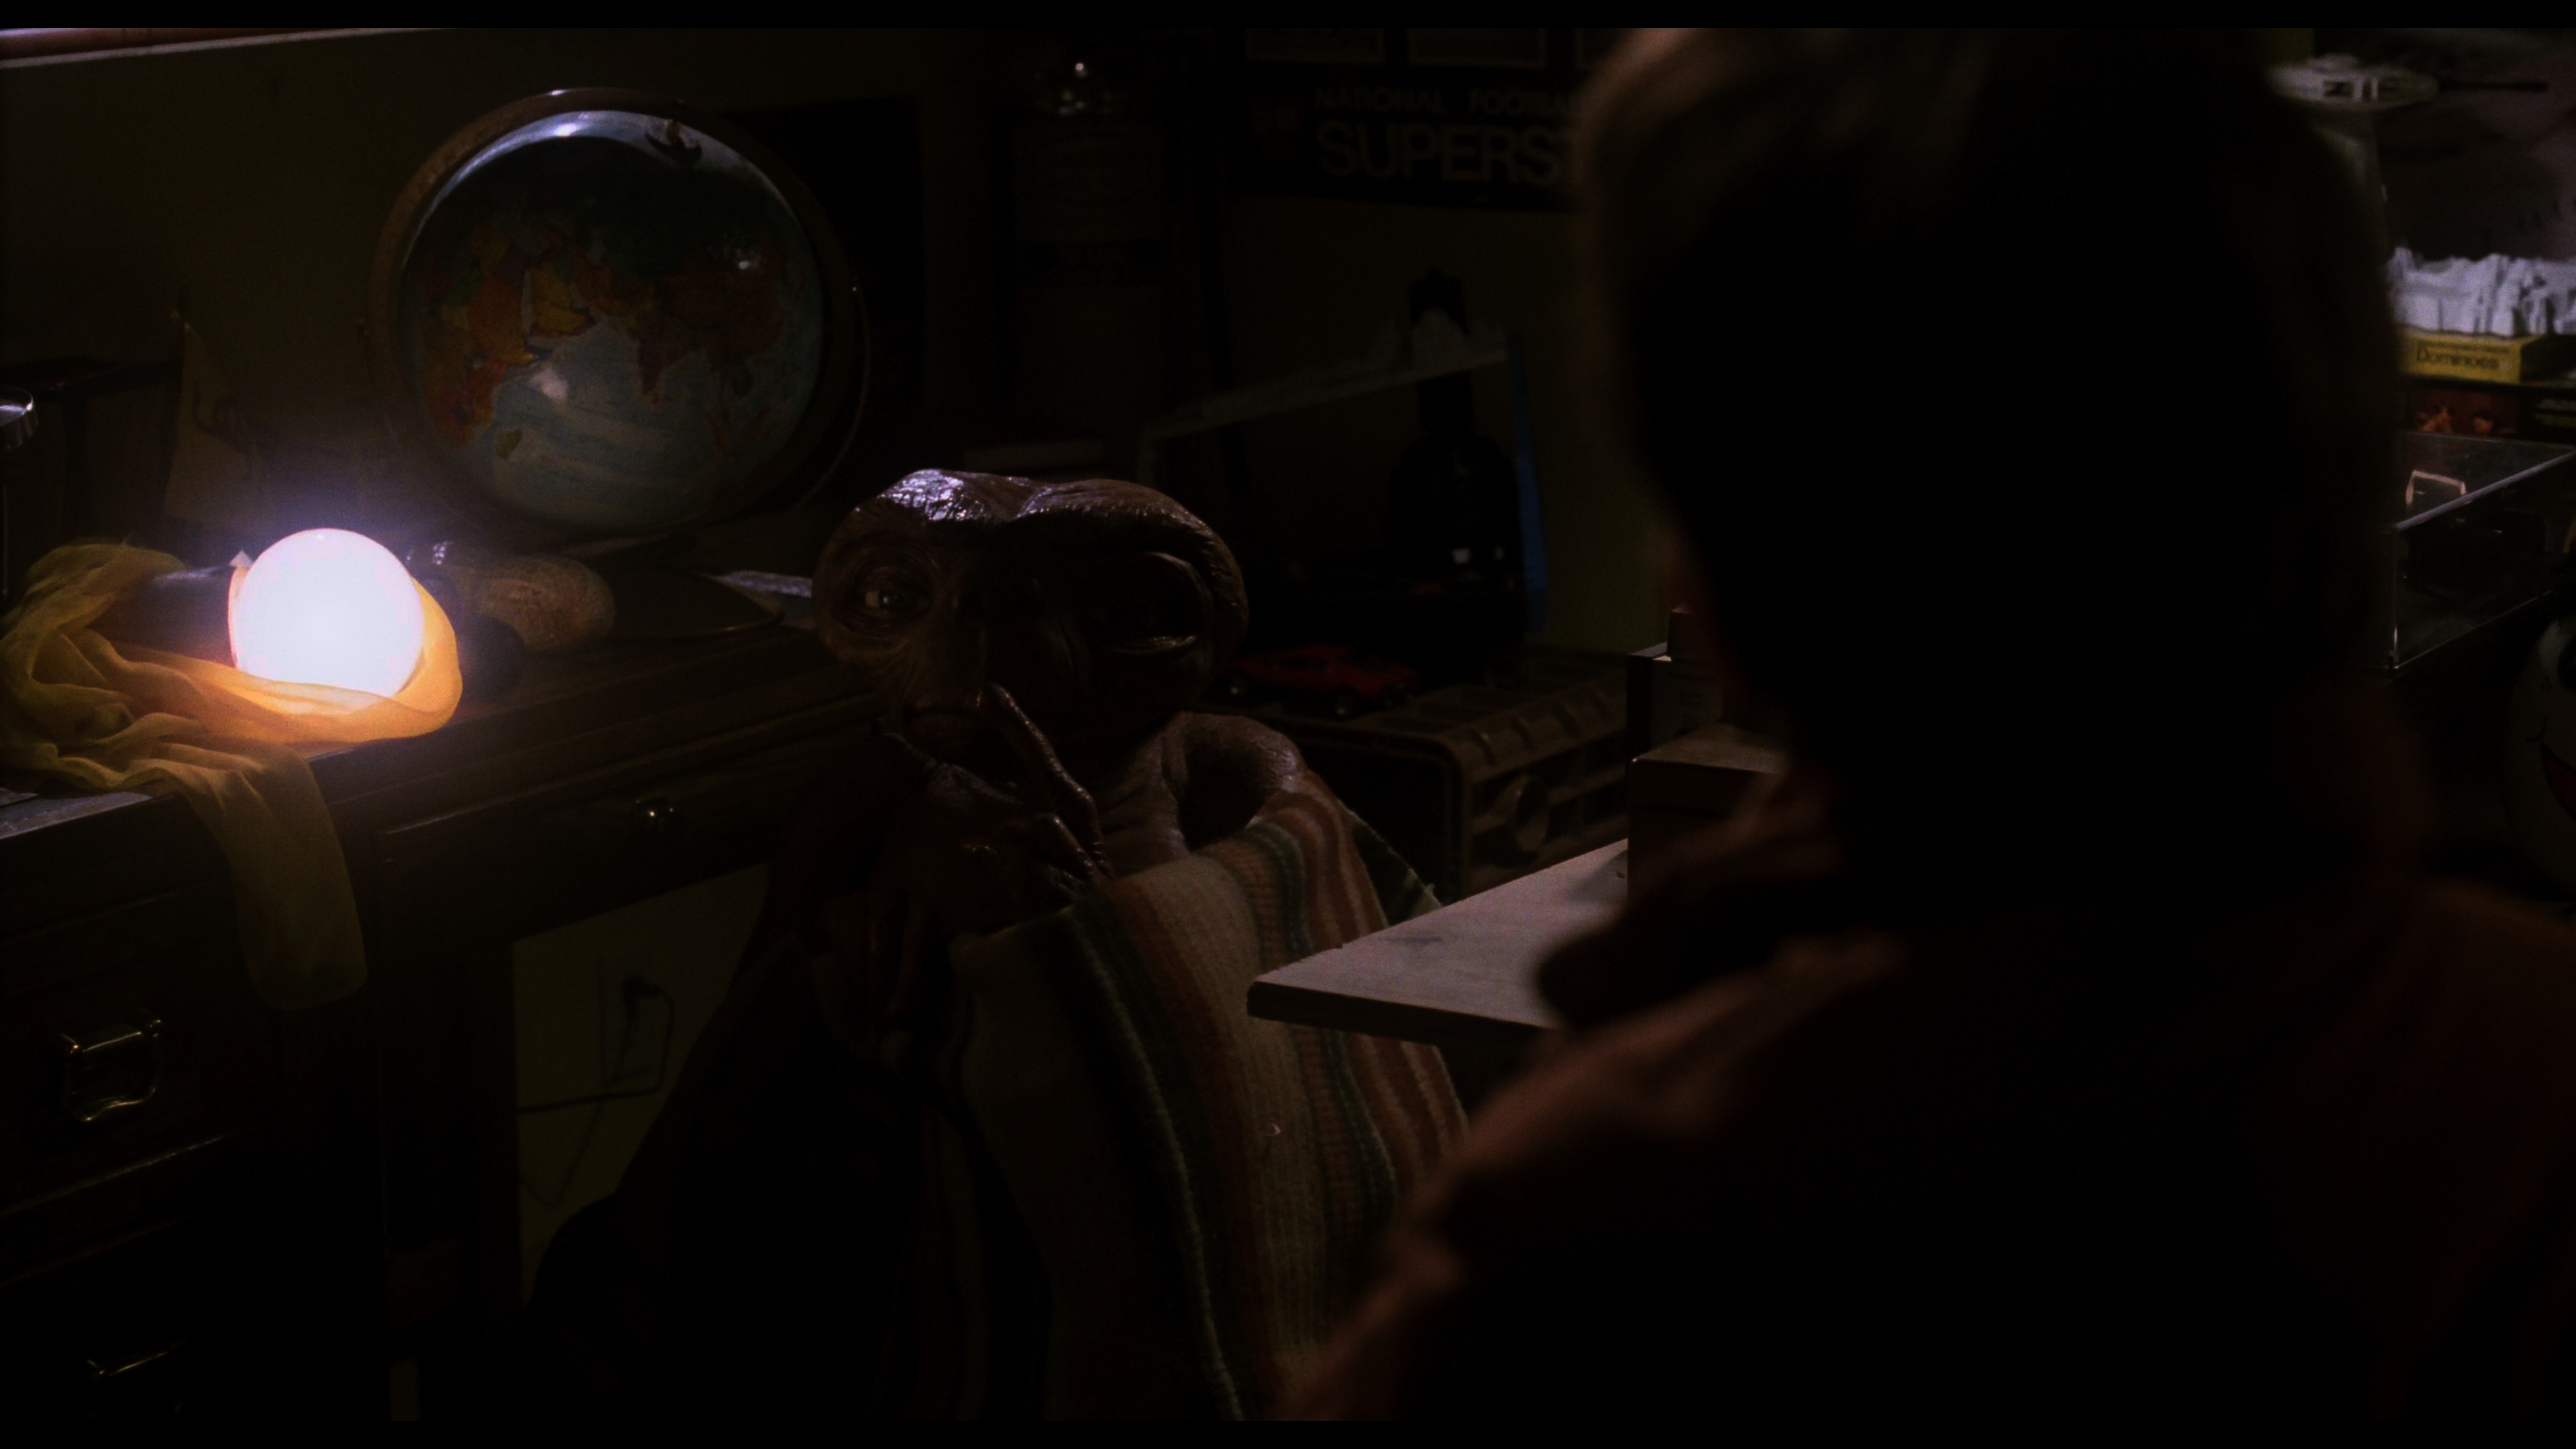 [E.T. 外星人].E.T.the.Extra-Terrestrial.1982.UHD.BluRay.2160p.HEVC.DTS-HD.MA.7.1-SUPERSIZE   54.93G-4.jpg